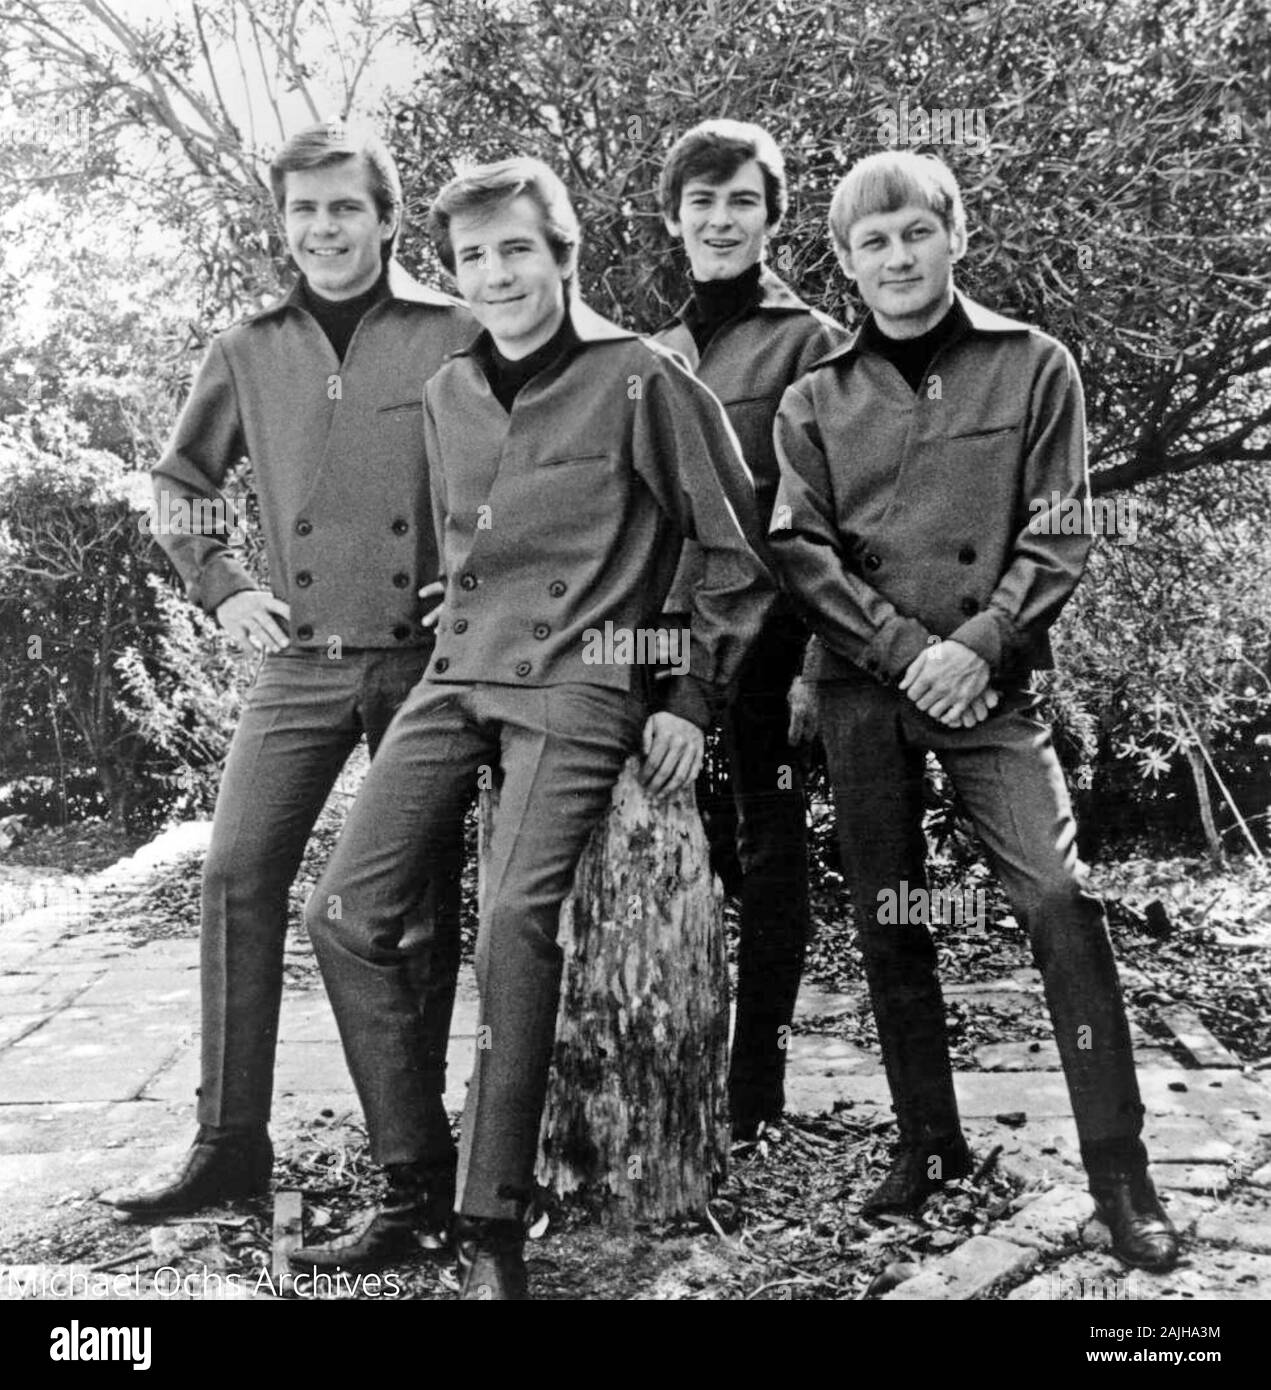 THE BOBBY FULLER FOUR Promotional photo of American rock group in 1965. From left: Randy Fuller, Bobby Fuller, DeWayne Quirico, Jim Reese Stock Photo